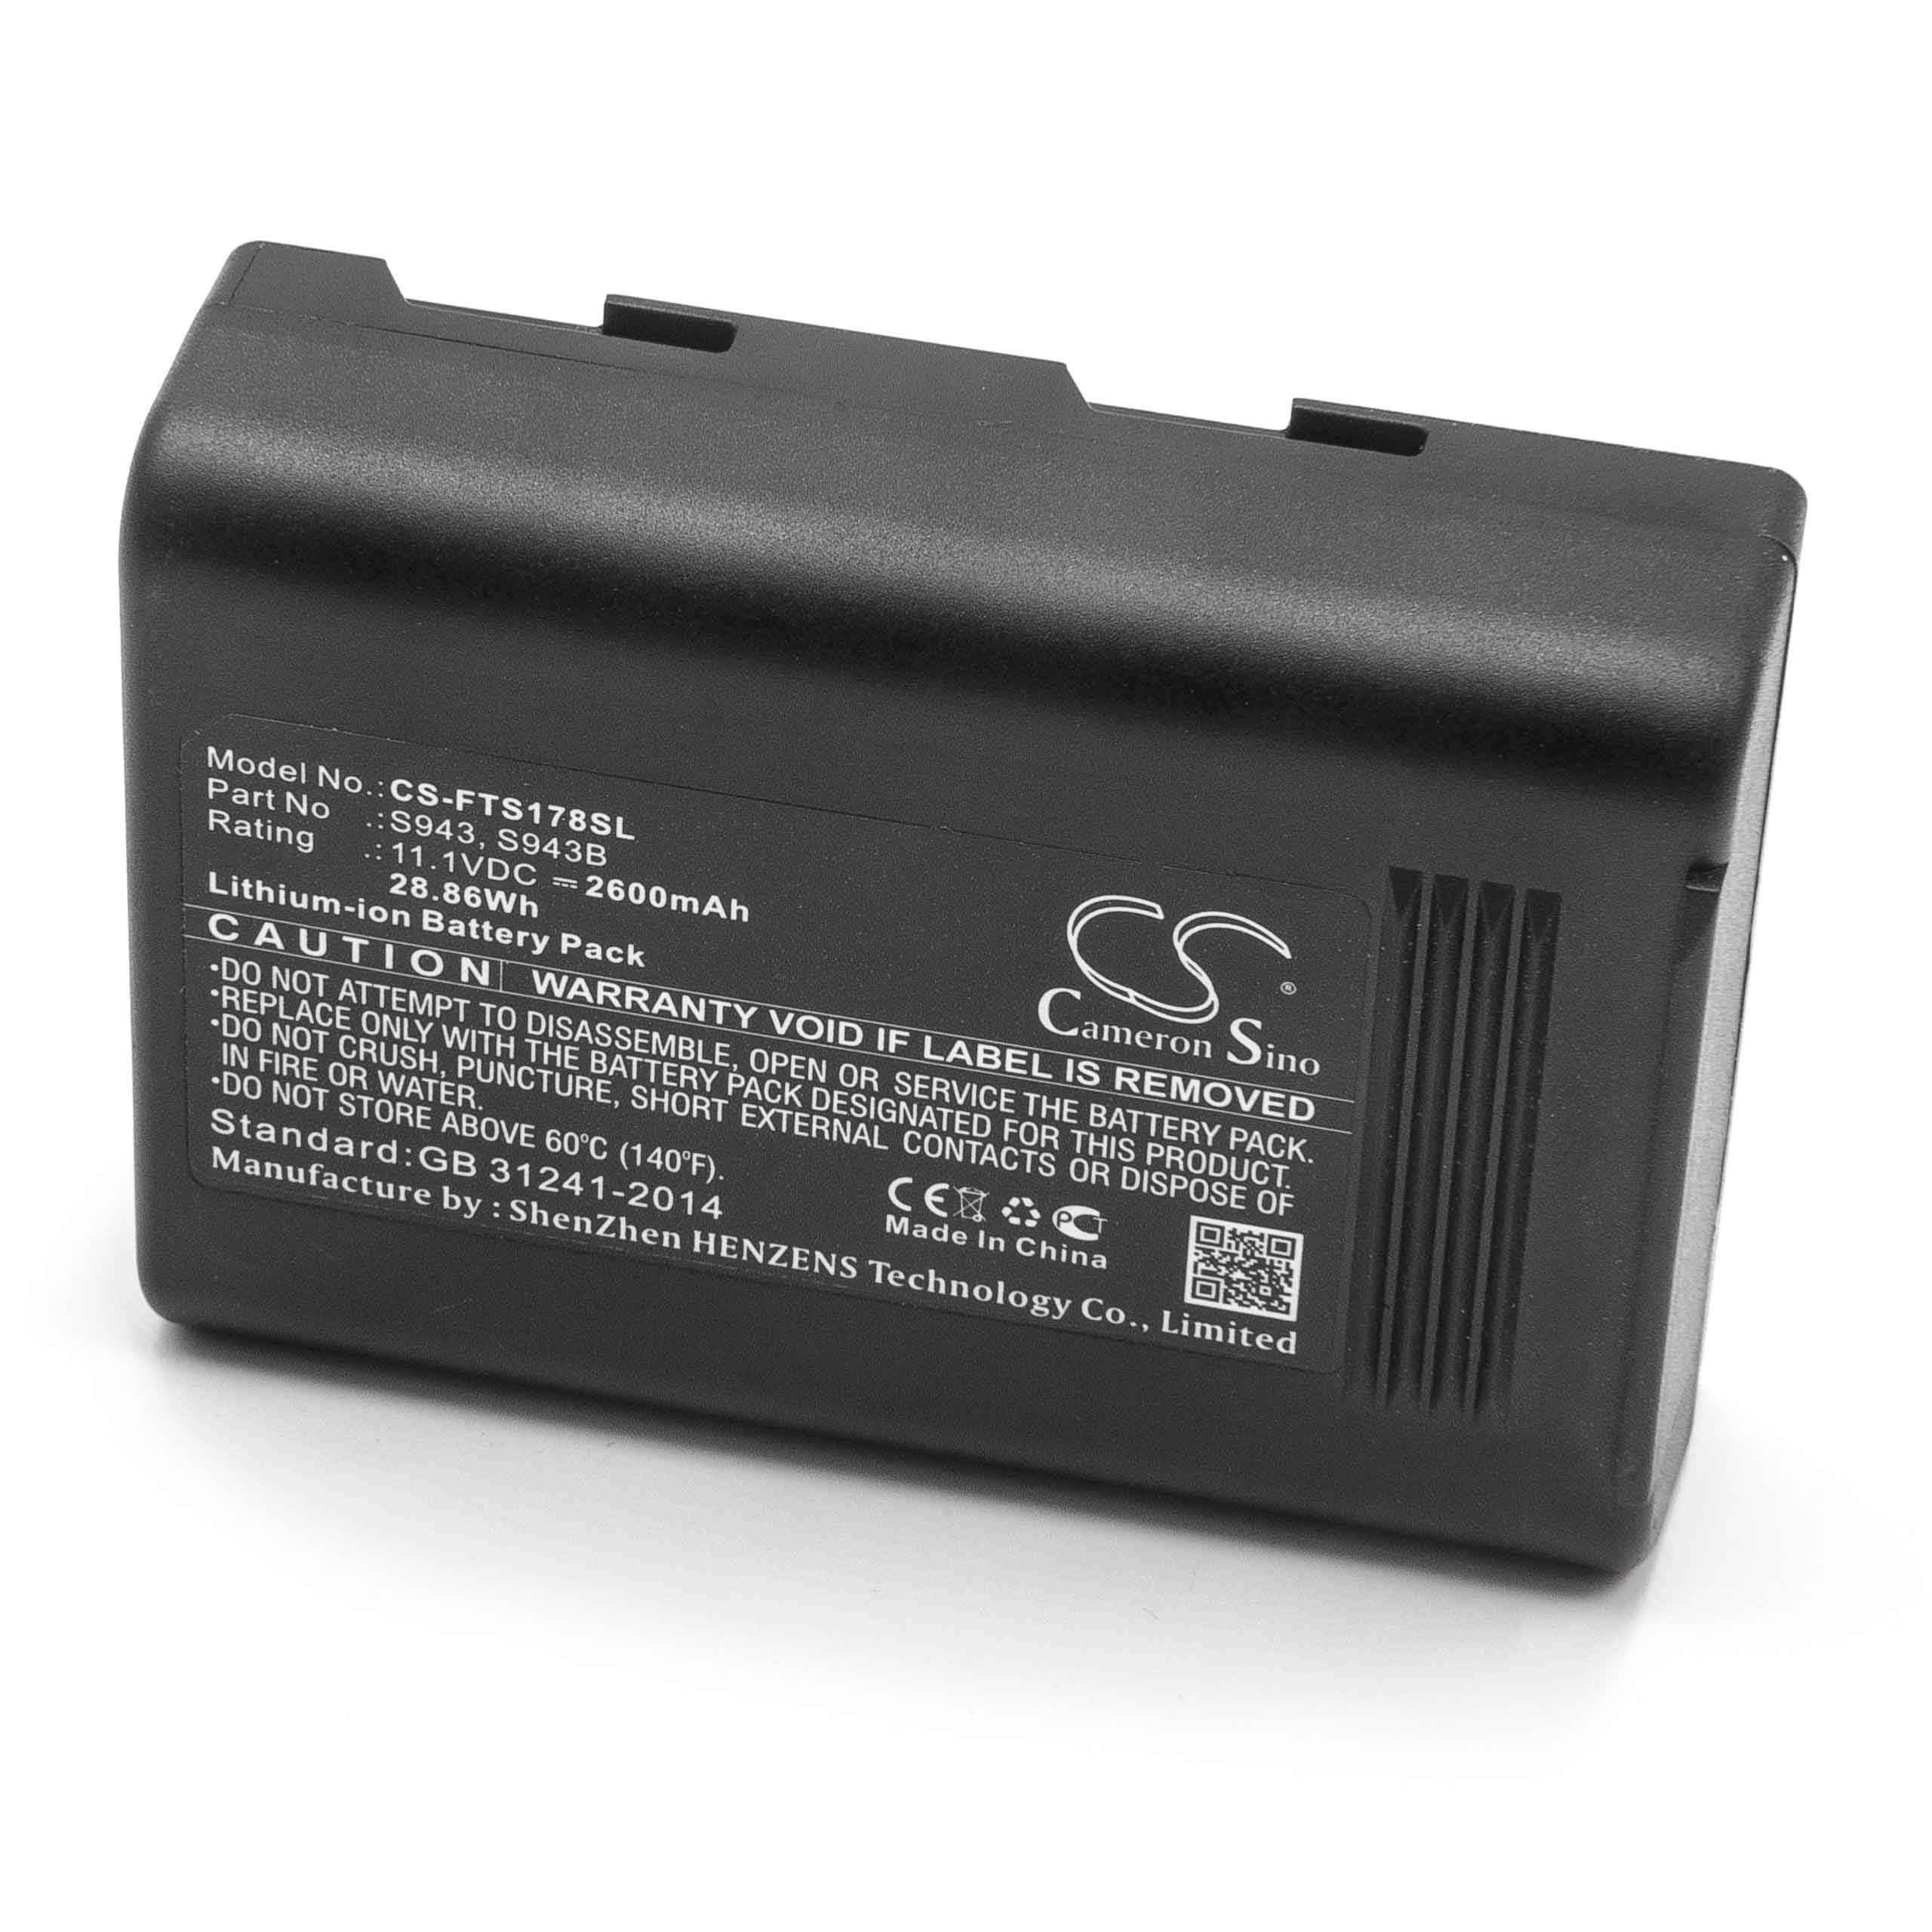 Batería reemplaza FITEL S943B, S943 para empalmador FITEL - 2600 mAh 11,1 V Li-Ion